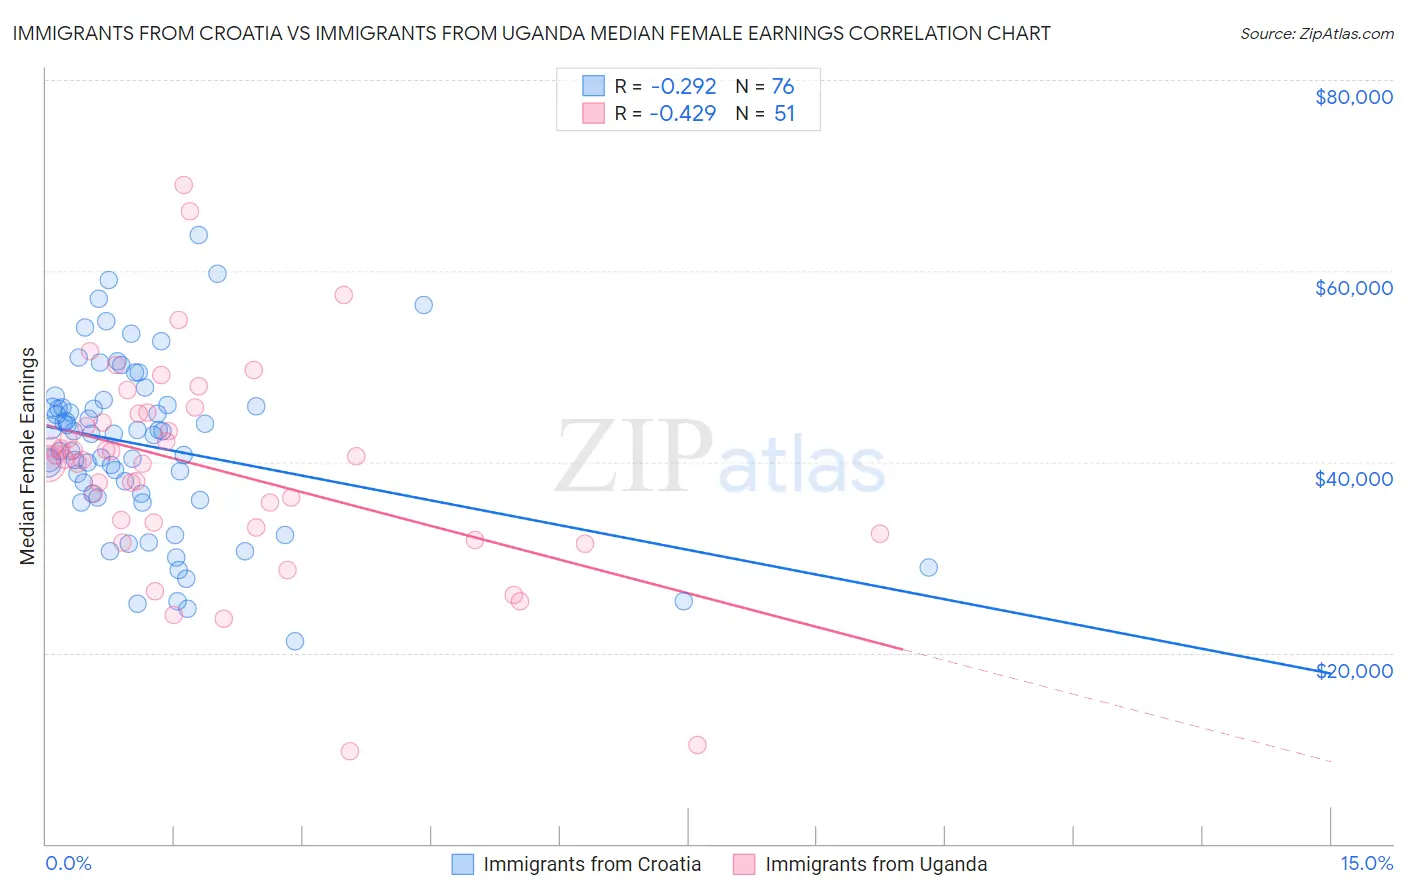 Immigrants from Croatia vs Immigrants from Uganda Median Female Earnings